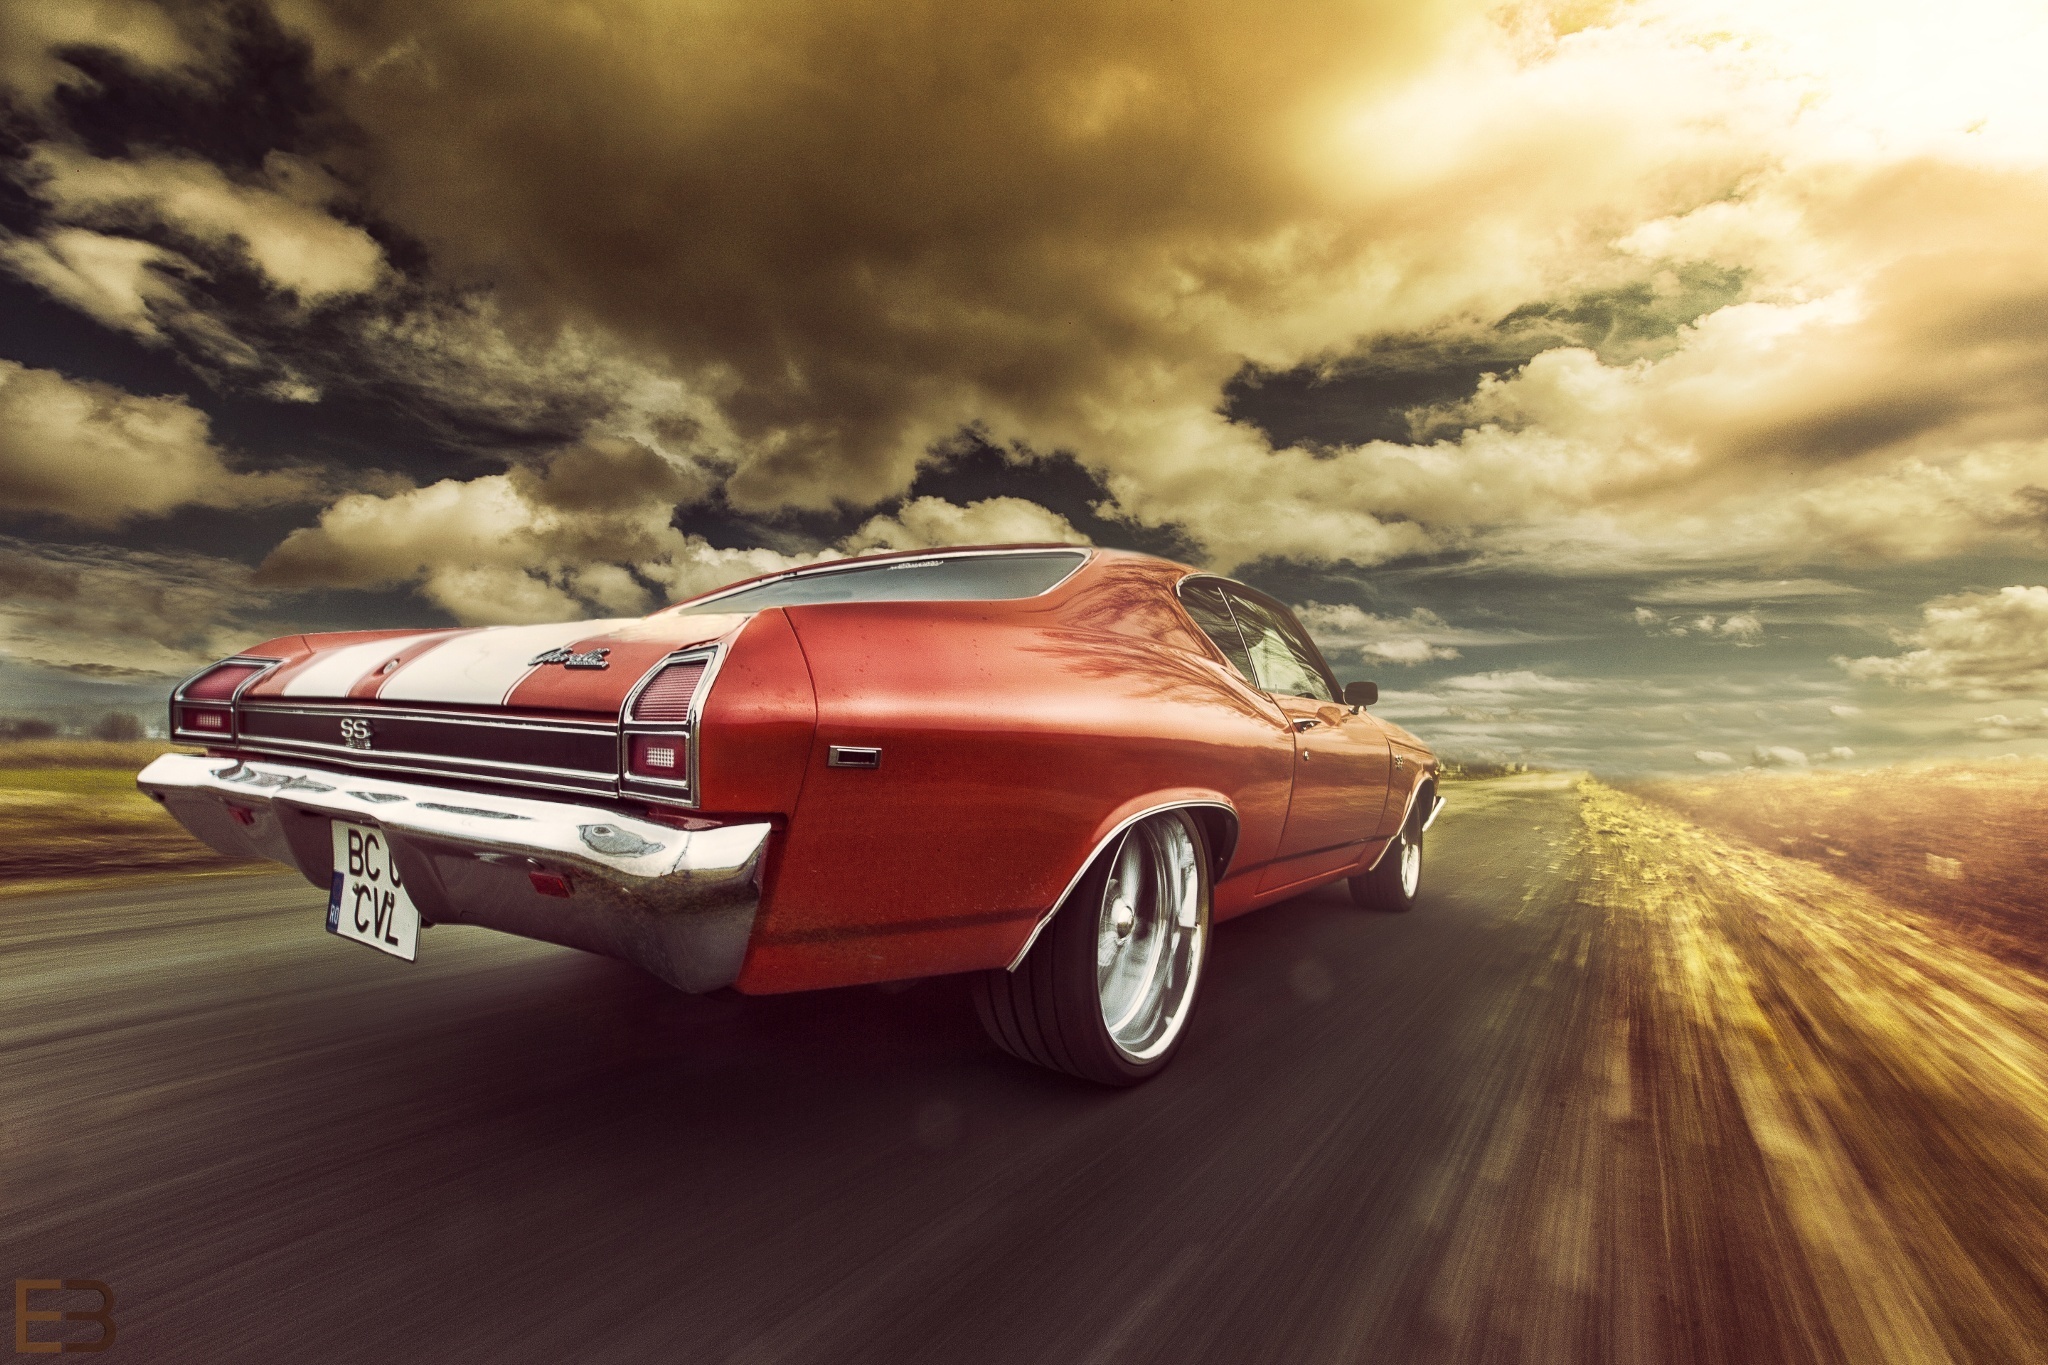 Chevrolet Chevelle SS, 1969 model capture, Crimson car glisten, Sunset backdrop, Muscle car prestige, 2050x1370 HD Desktop